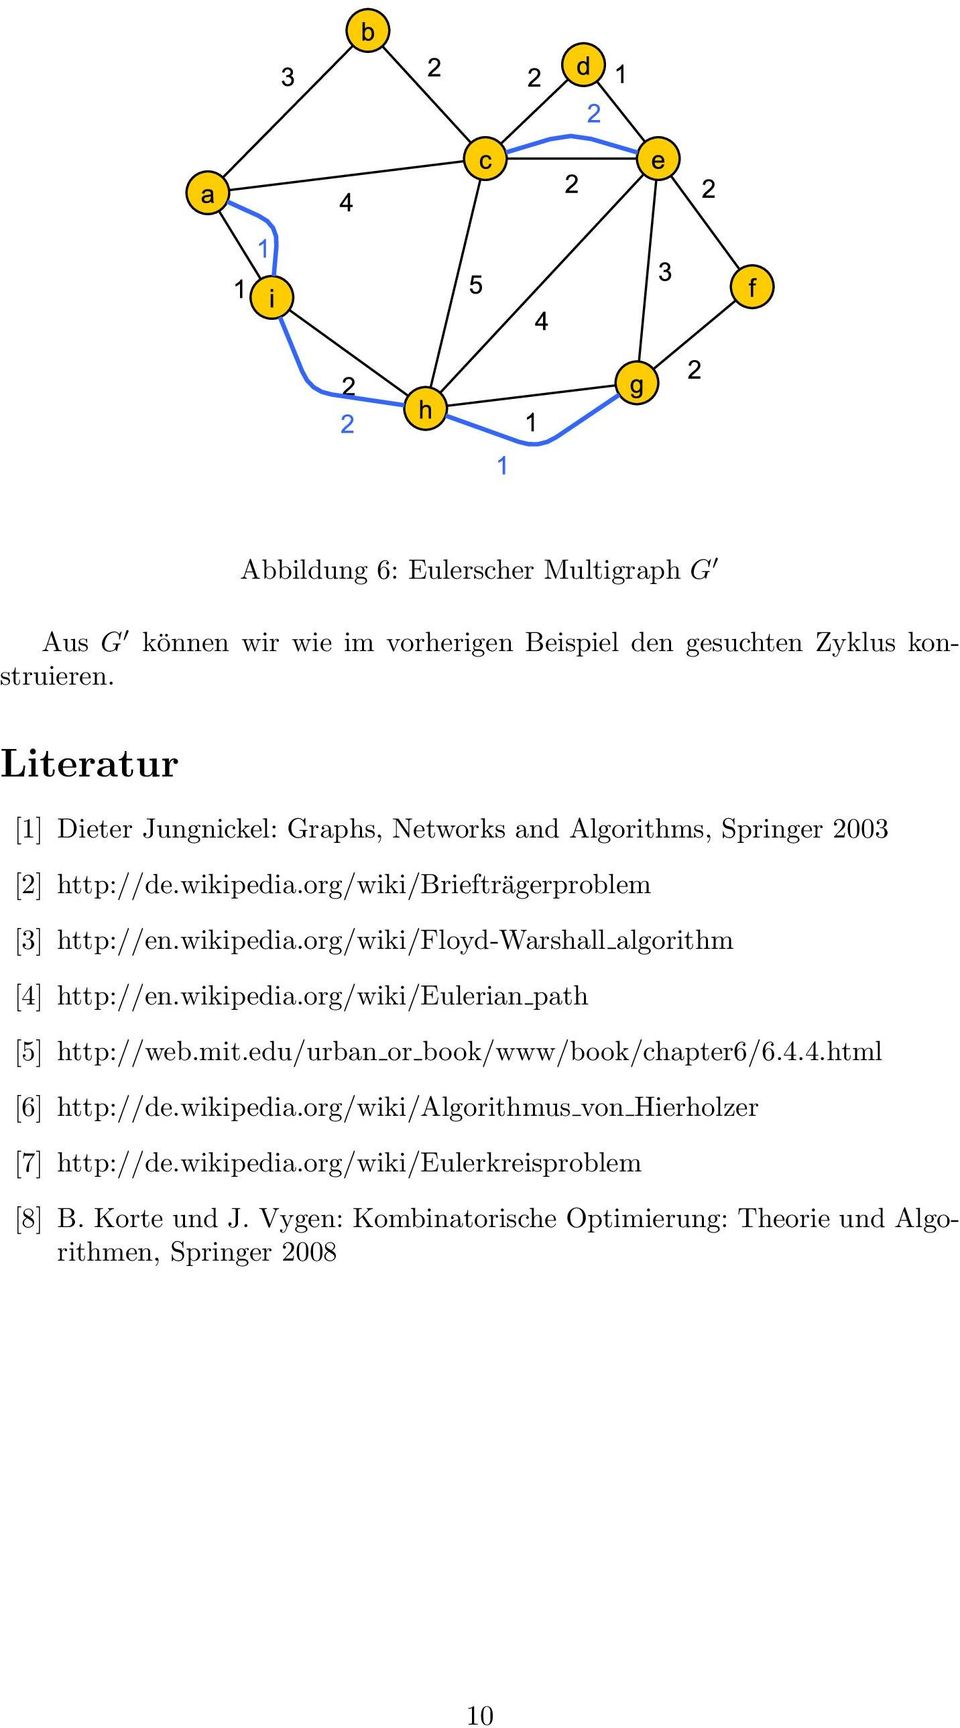 wikipedia.org/wiki/eulerian path [5] http://web.mit.edu/urban or book/www/book/chapter6/6.4.4.html [6] http://de.wikipedia.org/wiki/algorithmus von Hierholzer [7] http://de.